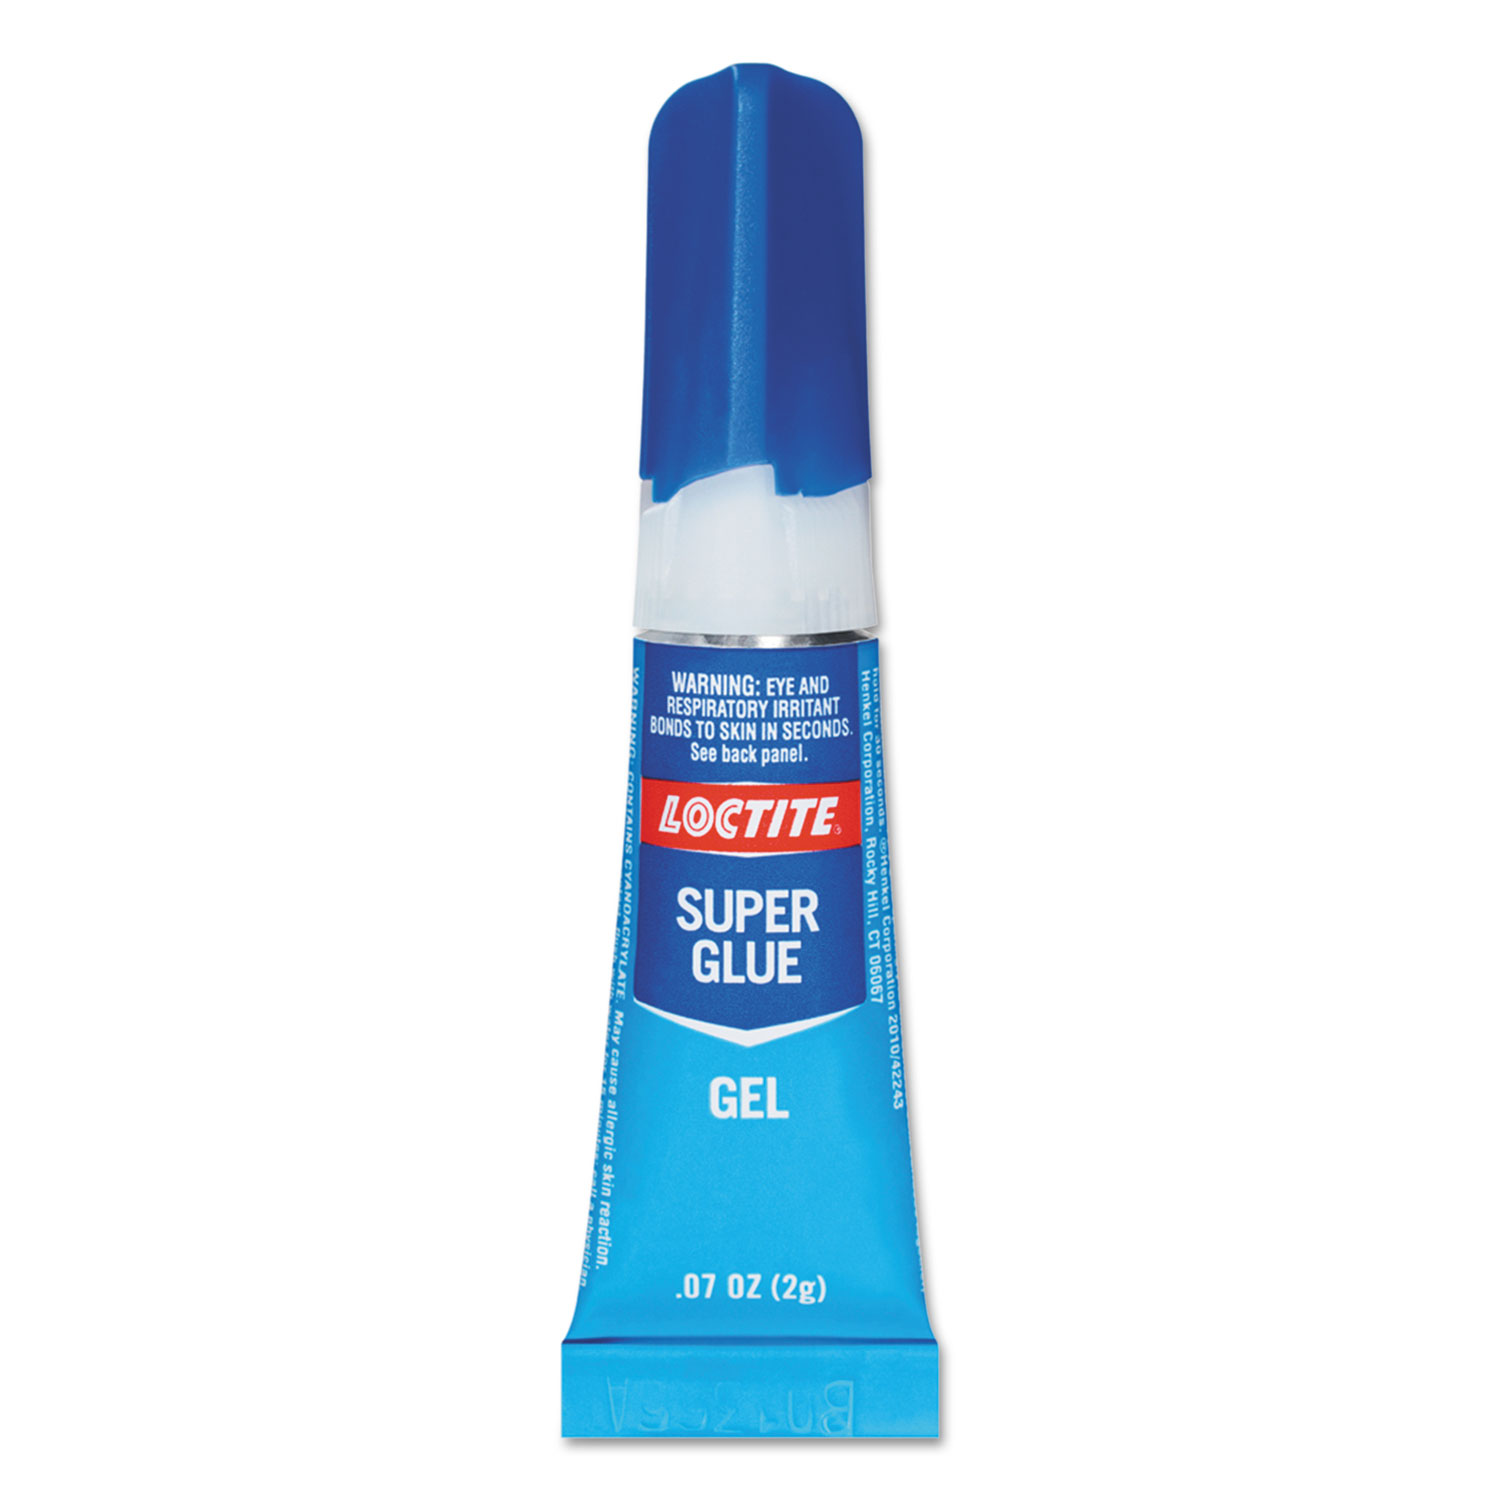 loctite super glue gel review